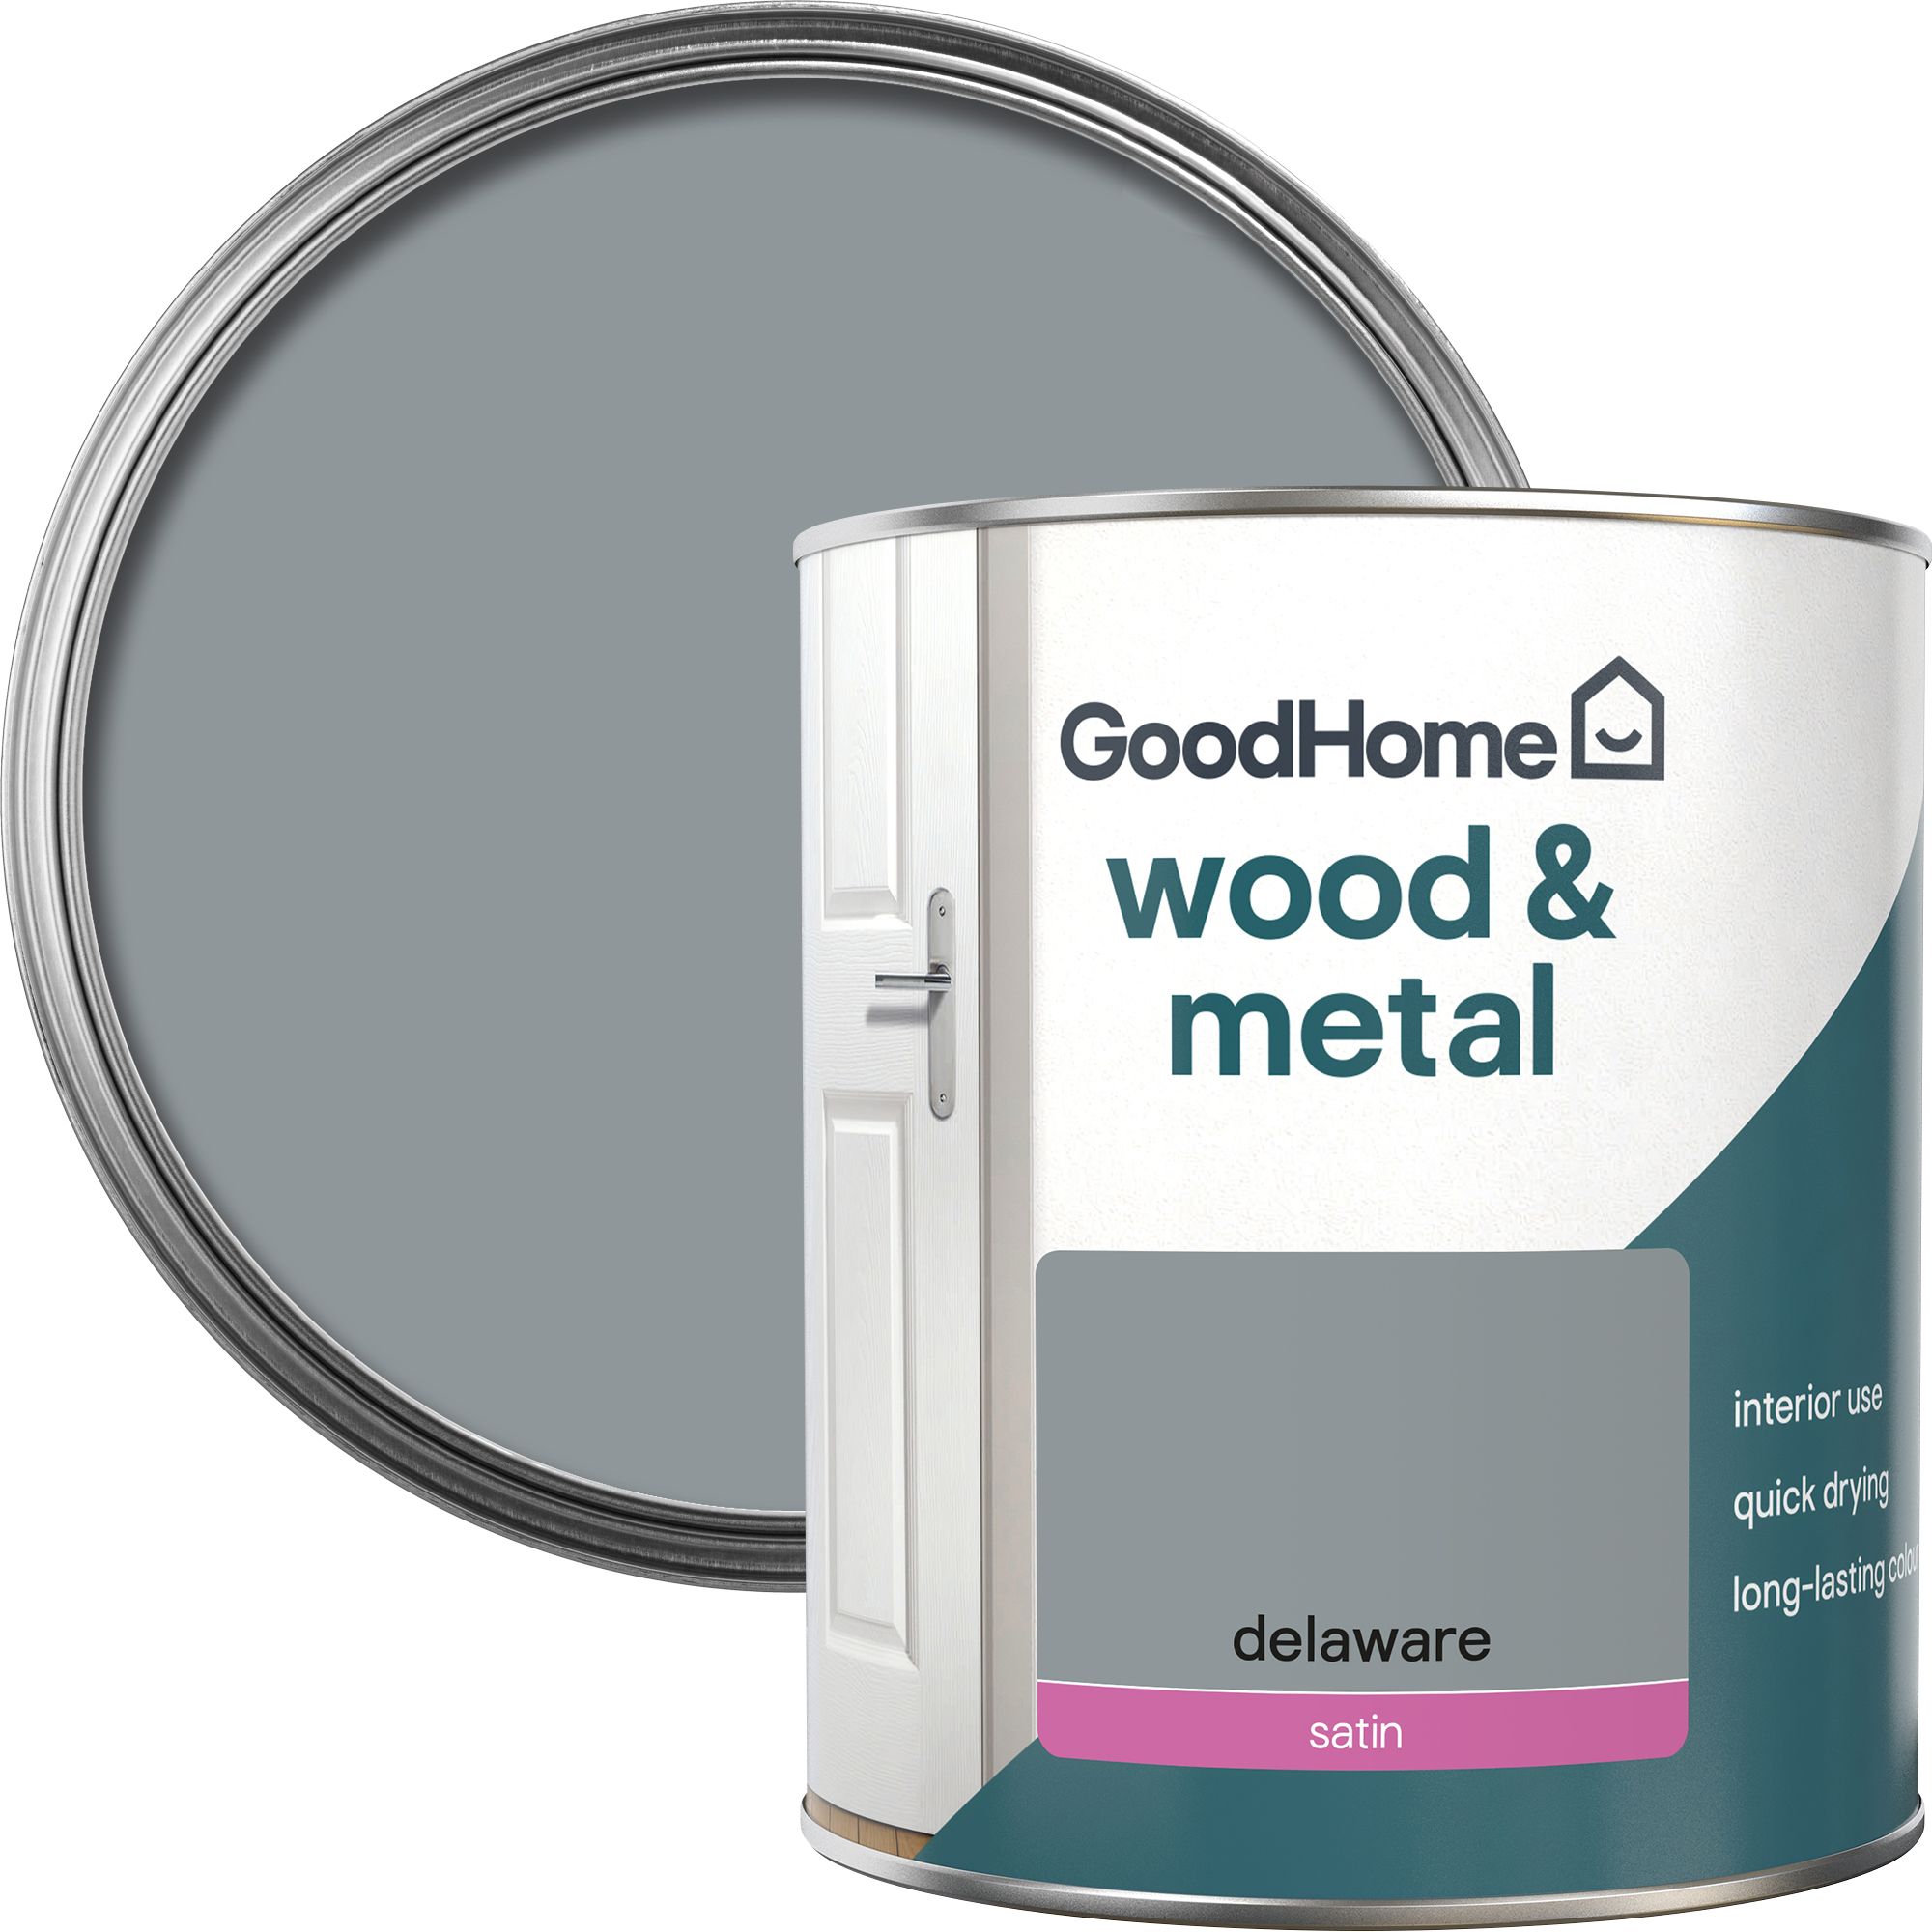 GoodHome Delaware Satin Metal & wood paint, 750ml